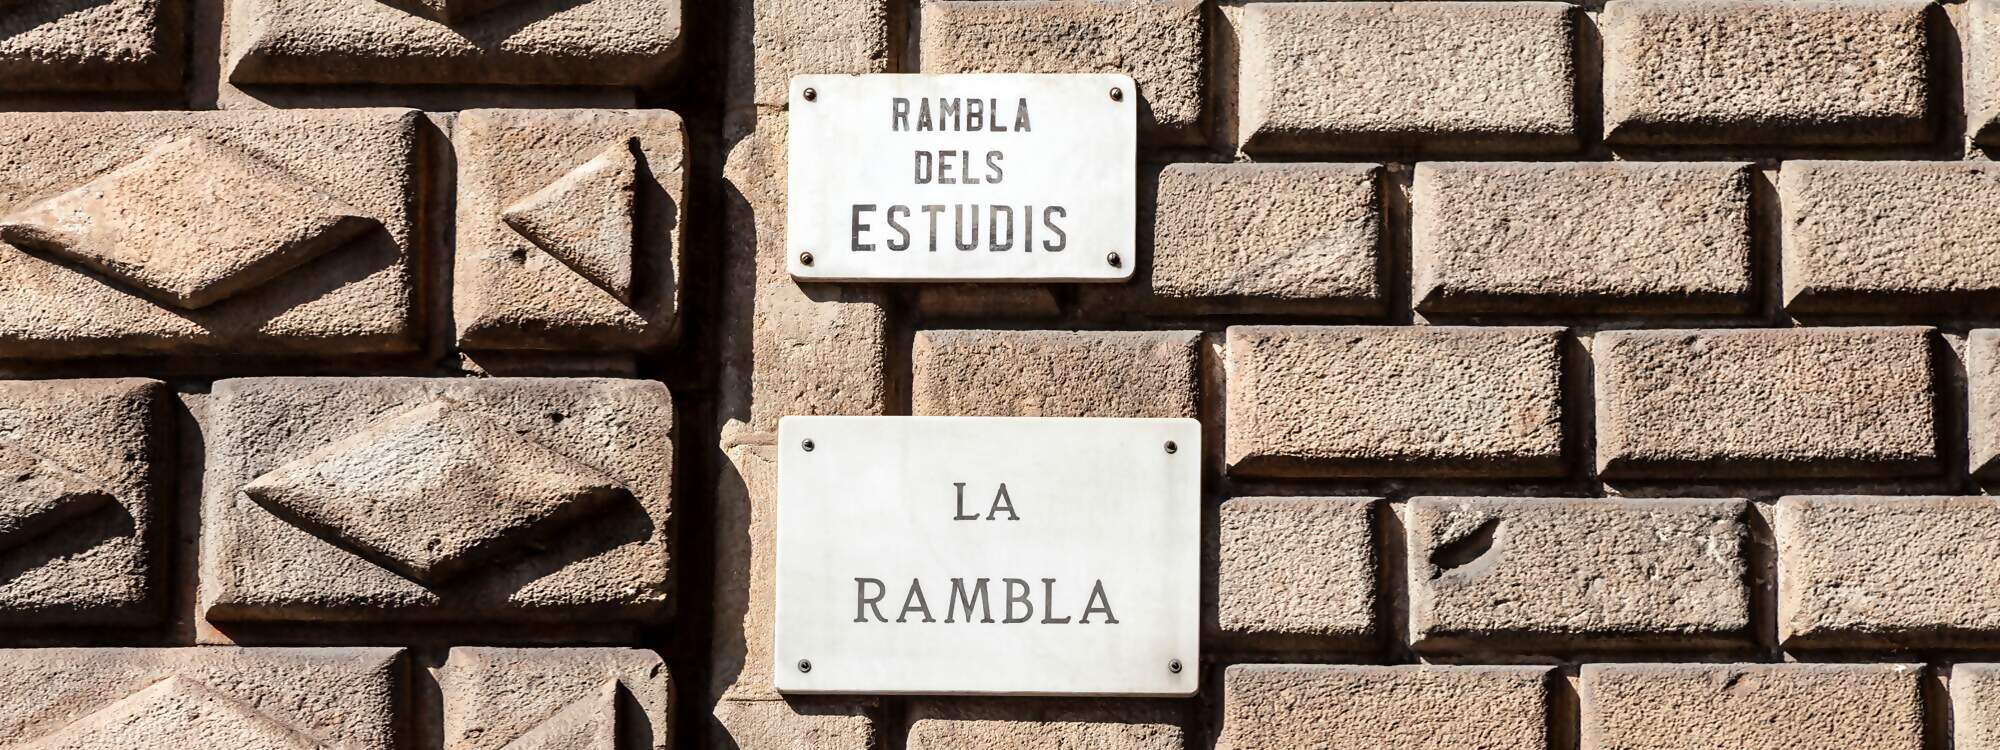 Flaniermeile - Las Ramblas - Barcelona